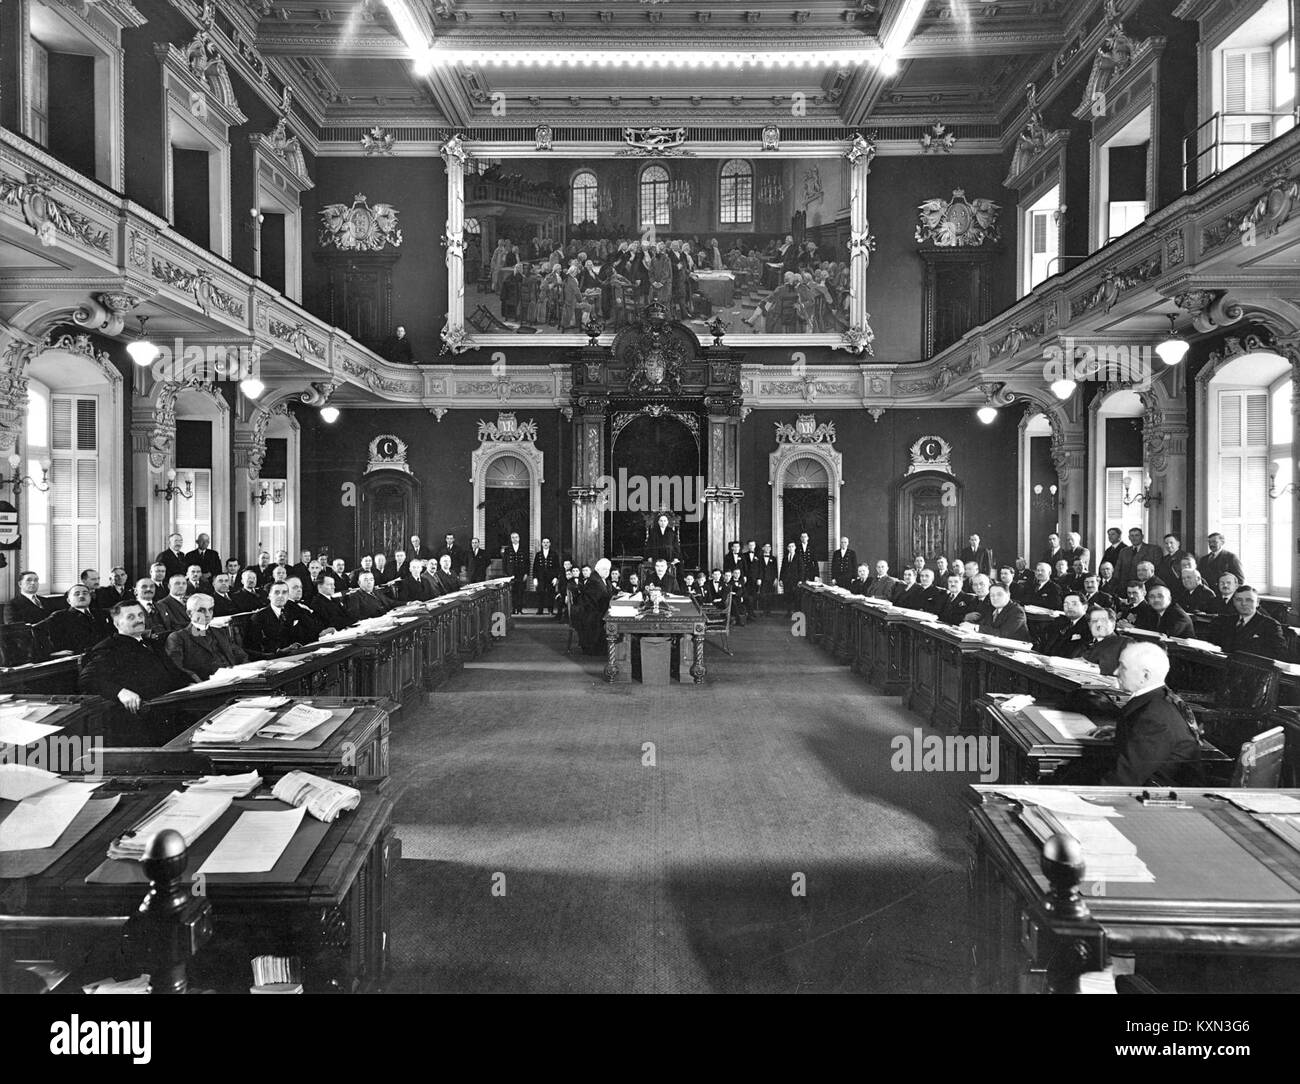 Assemblee legislative du quebec Black and White Stock Photos & Images ...